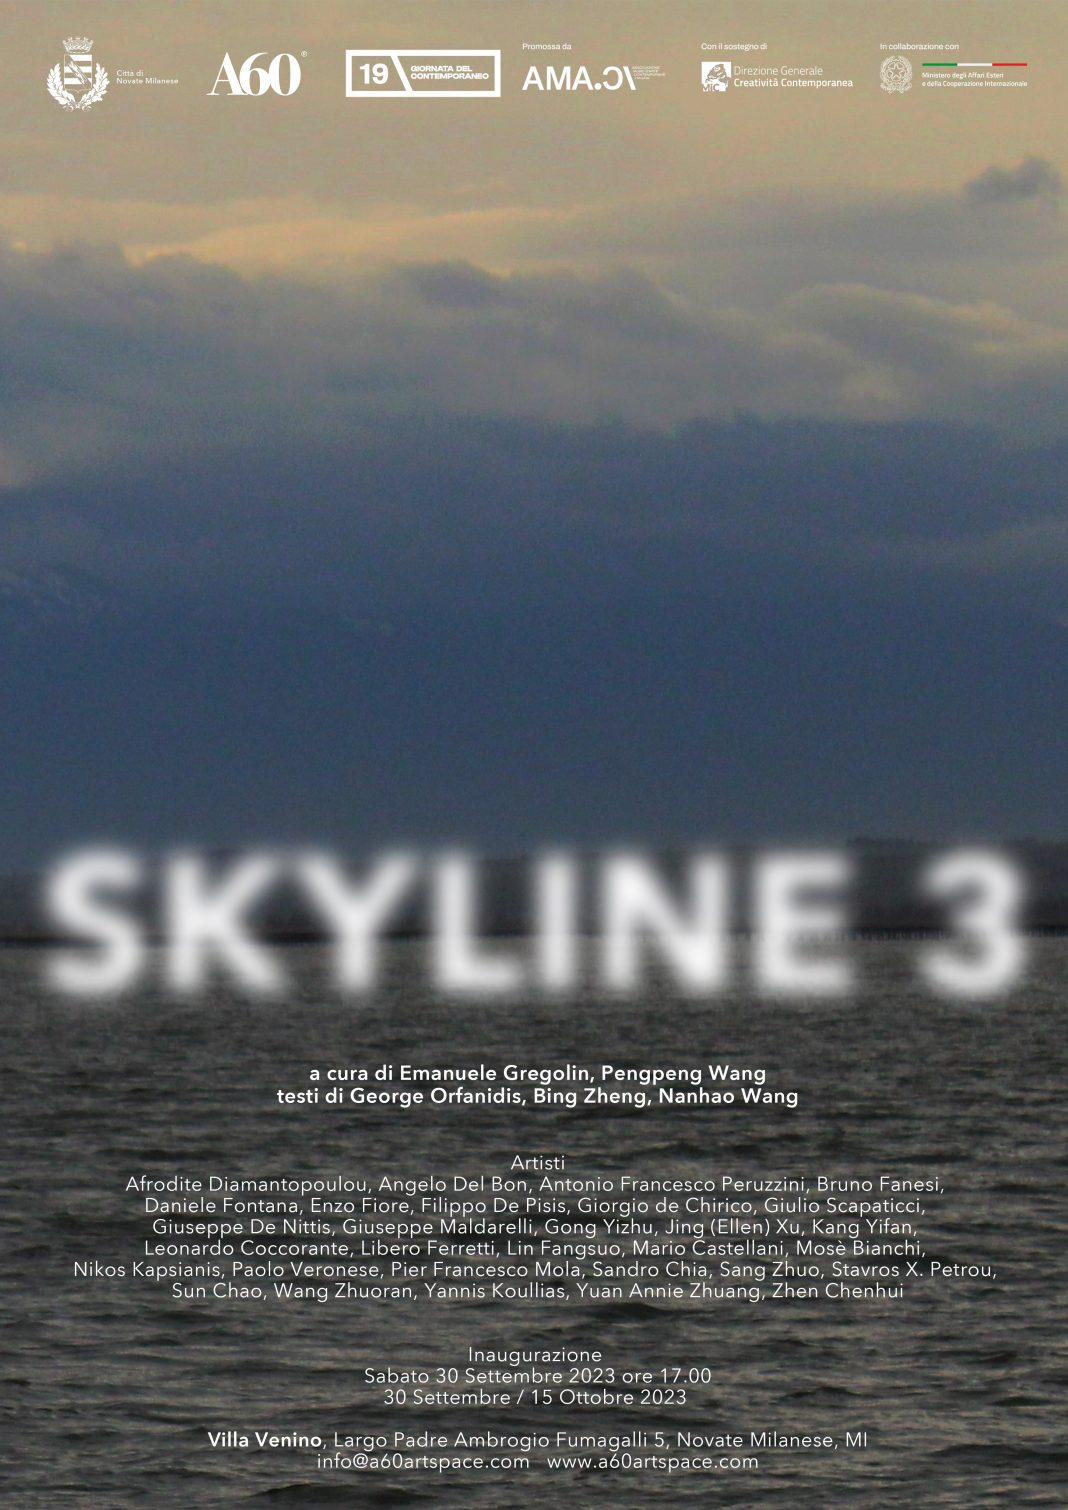 Skyline 3https://www.exibart.com/repository/media/formidable/11/img/6e7/SKYLINE-3-1068x1510.jpg